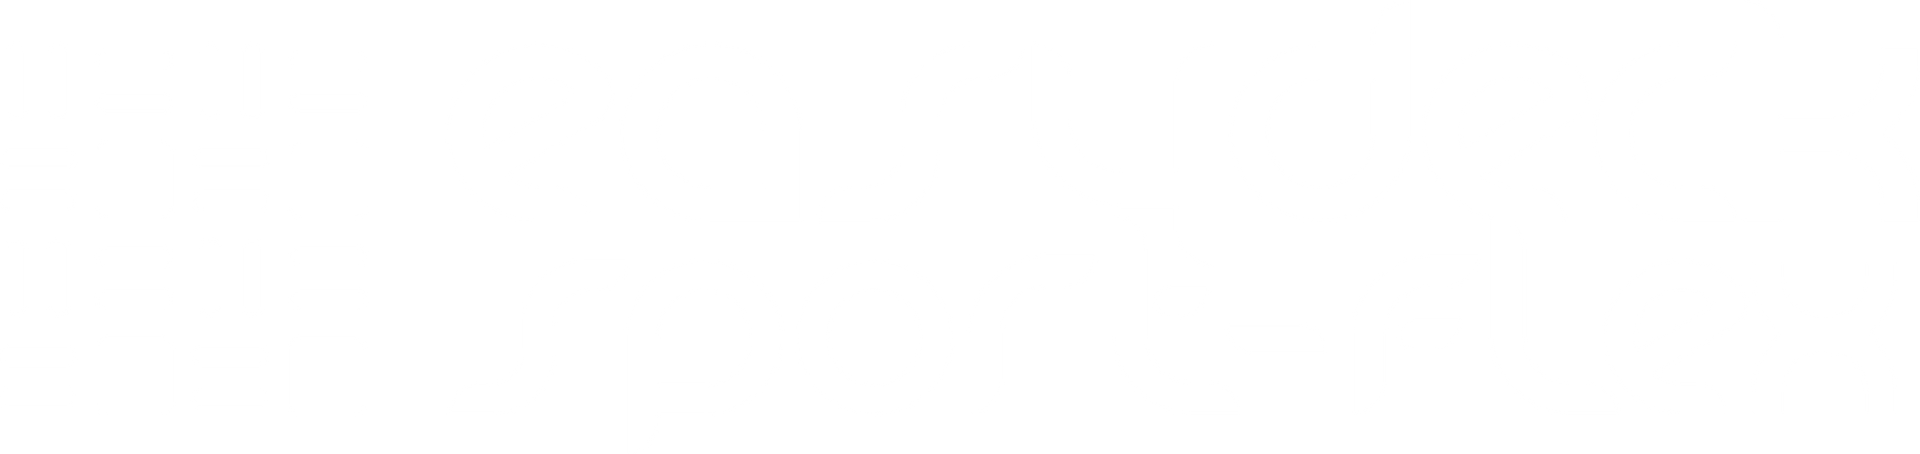 logotipo easydeck sportflex